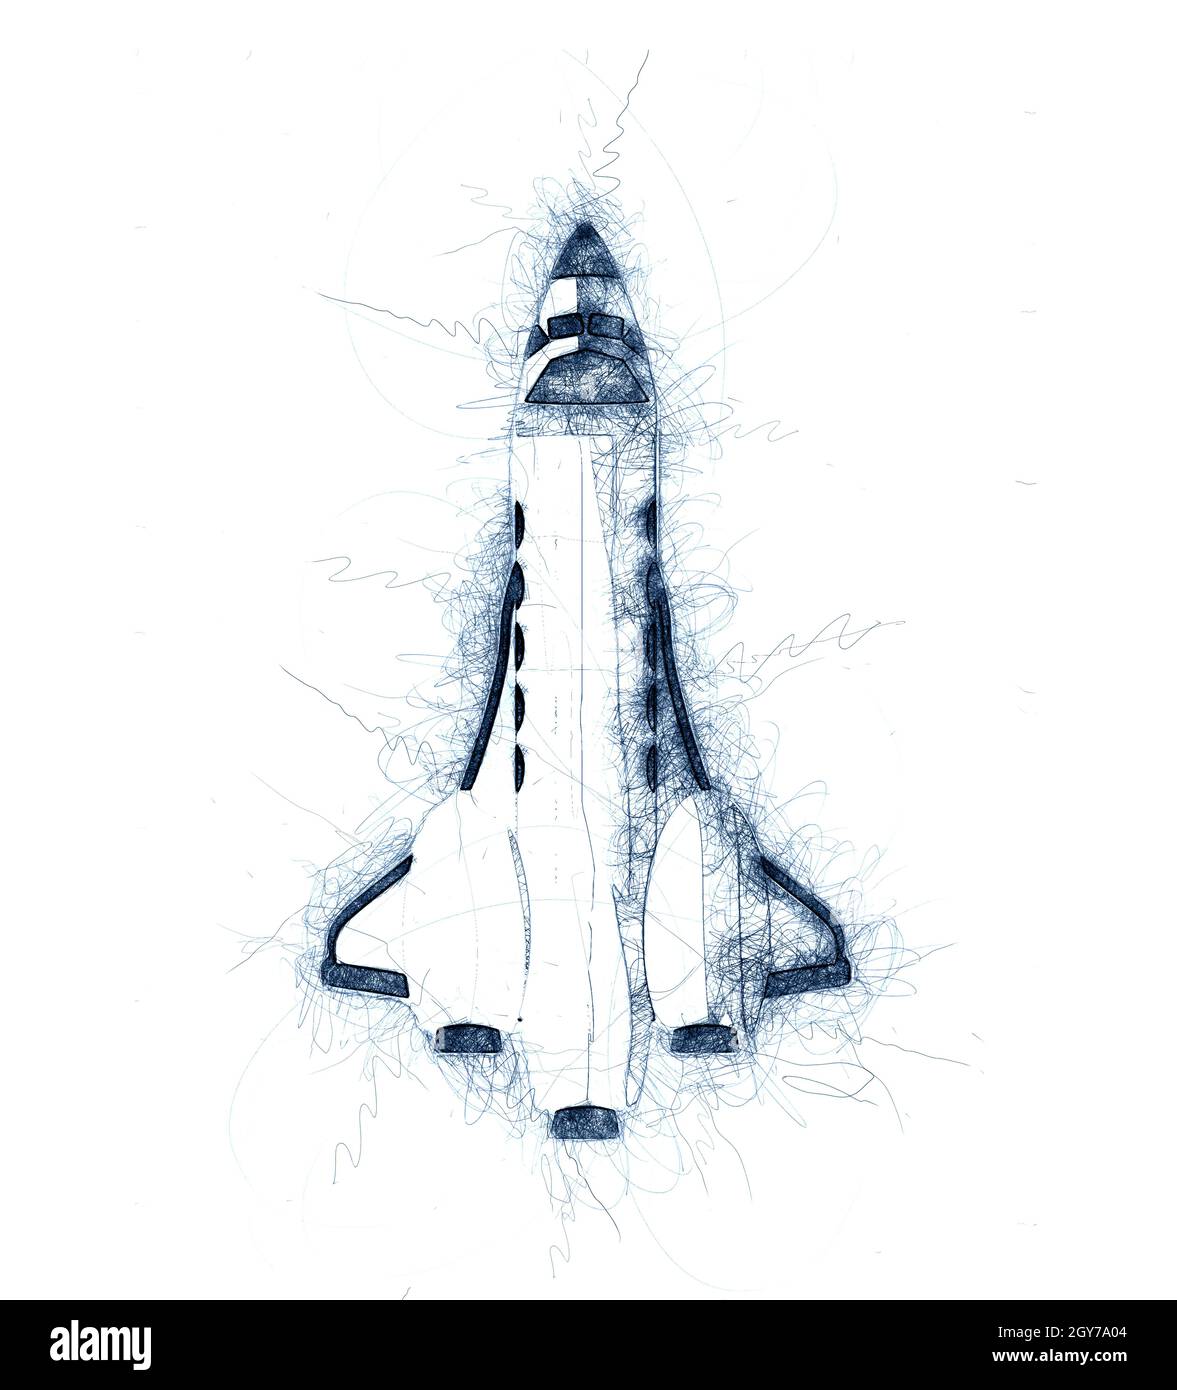 14009 Space Shuttle Outline Images Stock Photos  Vectors  Shutterstock